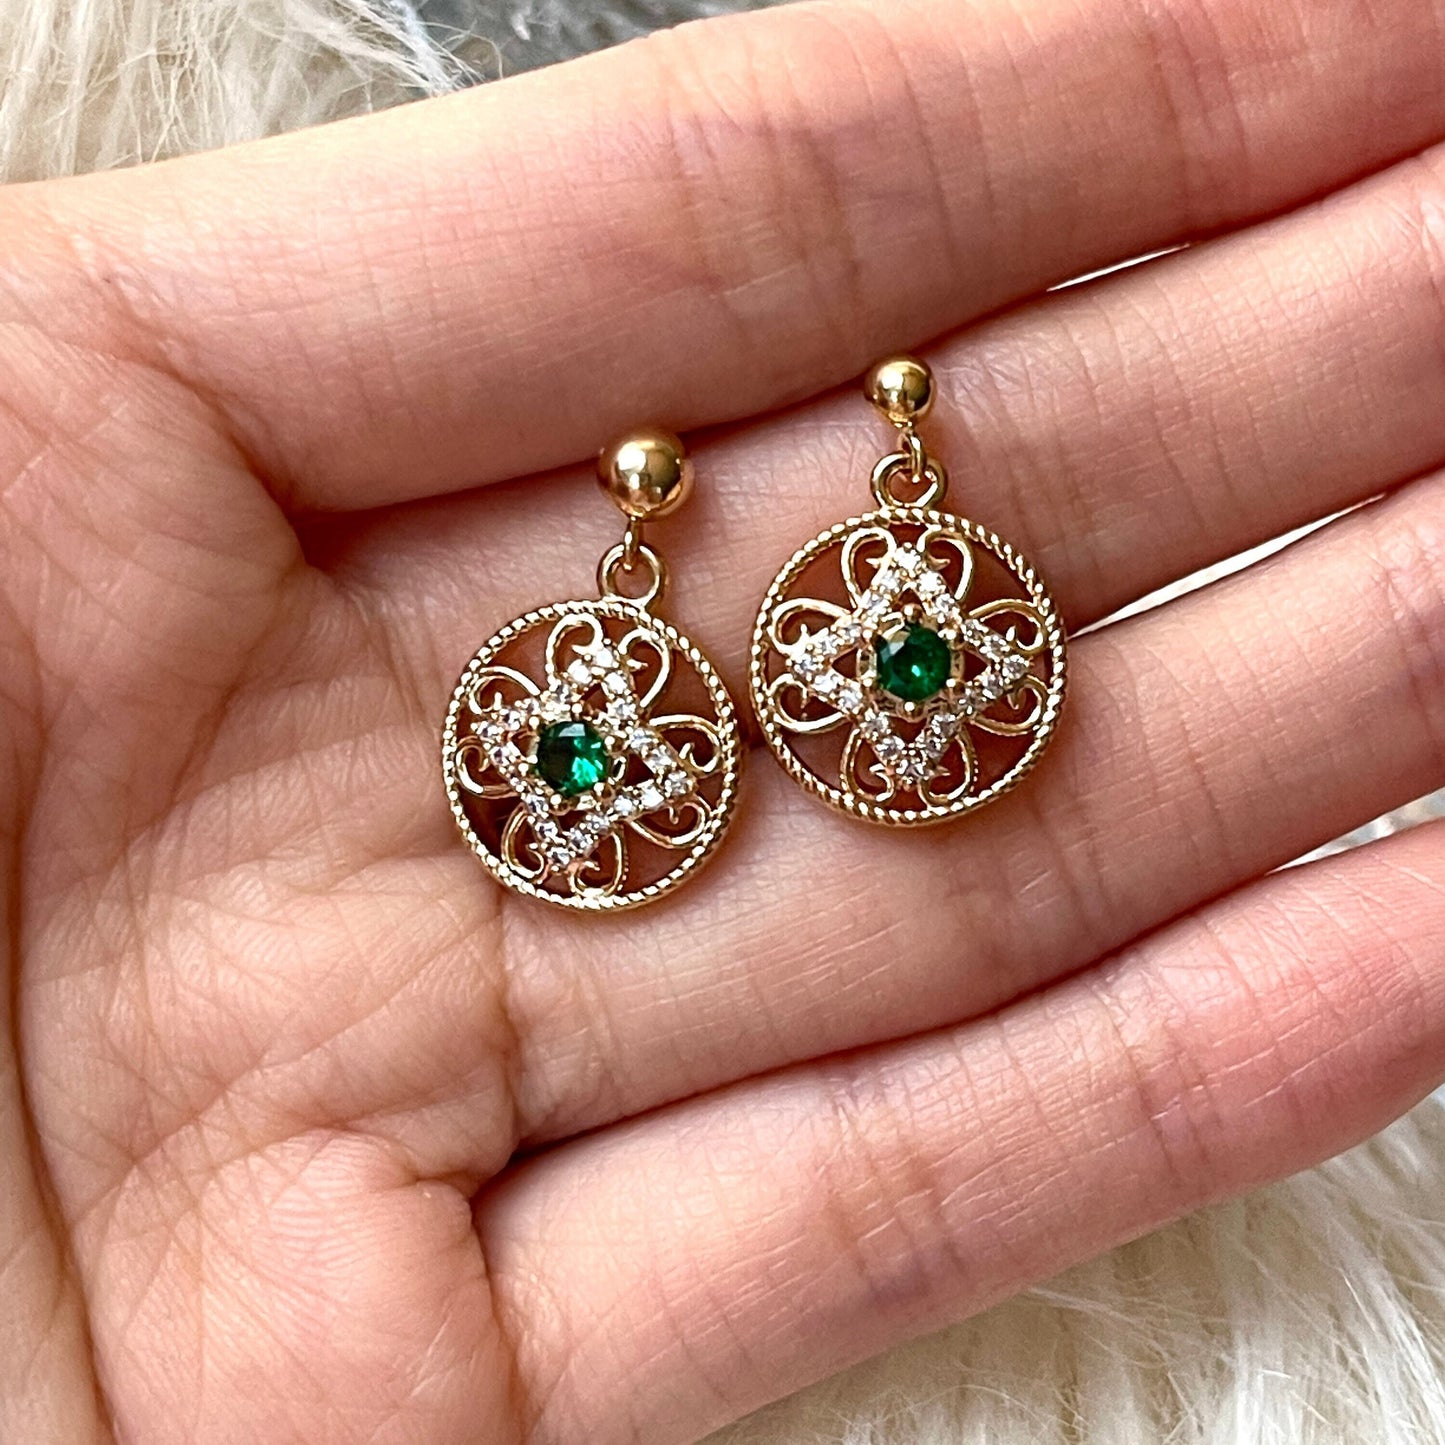 Emerald Green Earrings, 14K Gold Lace Earrings, Vintage Style Dangle, Infinity Earrings, Round Hoop Earrings, Delicate Wedding Birthday Gift